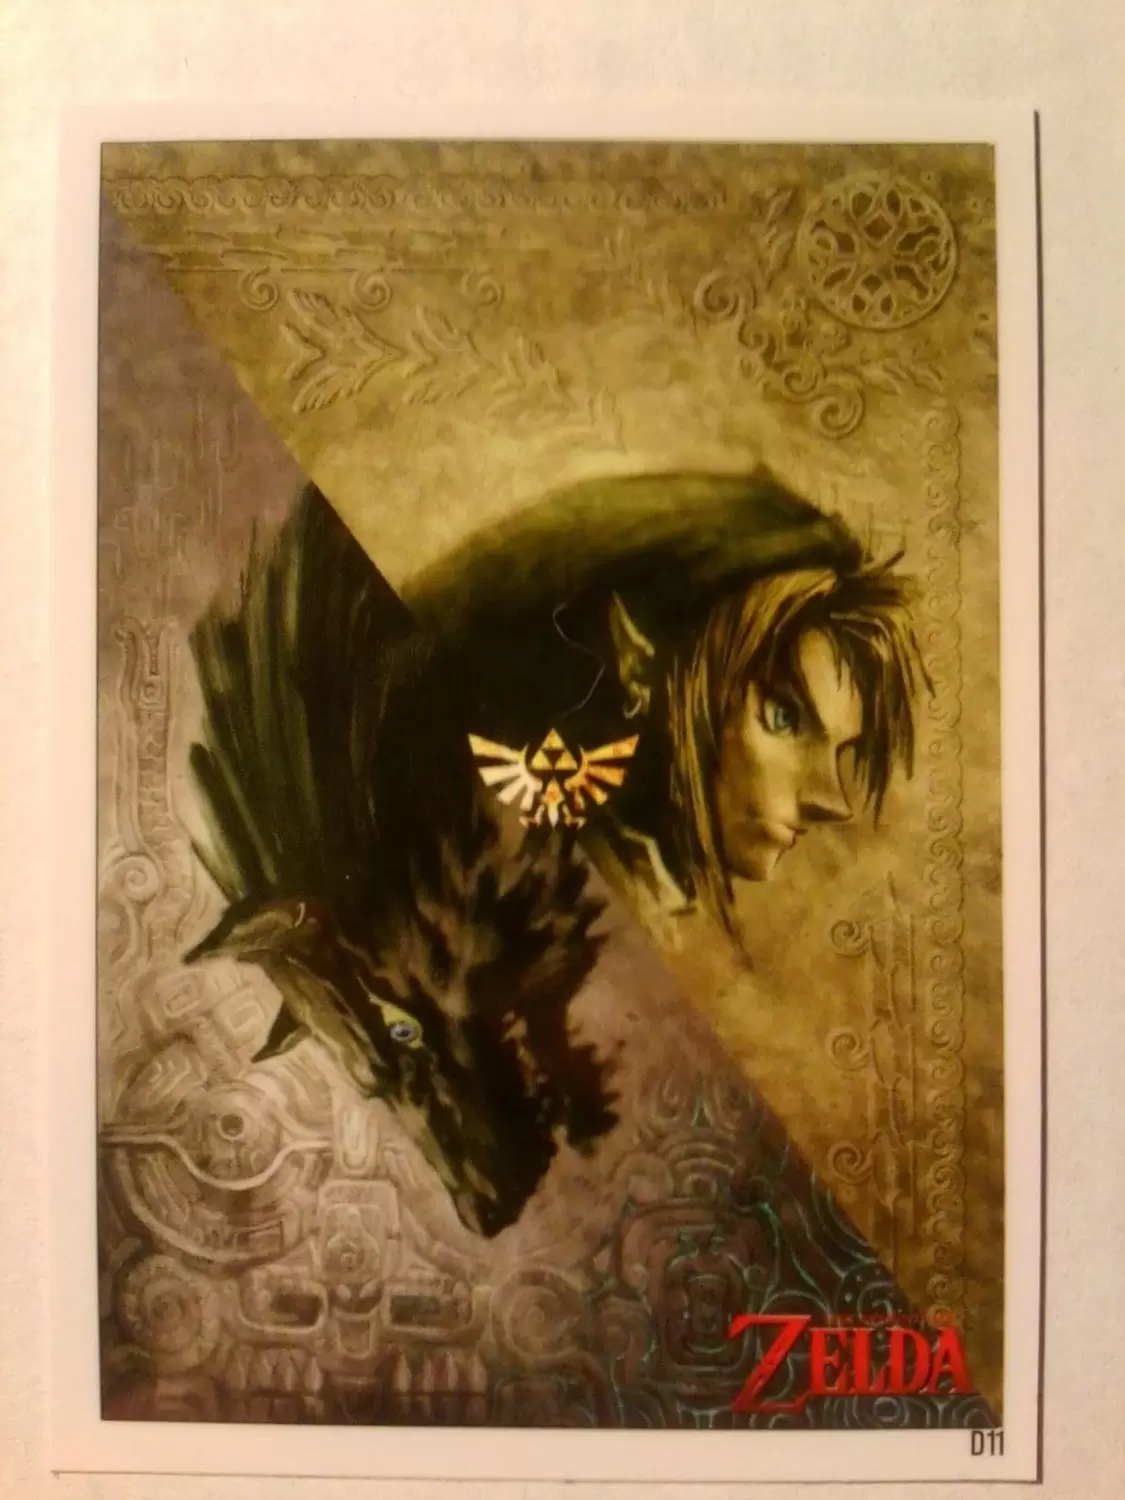 The Legend of Zelda - Twilight Princess artwork